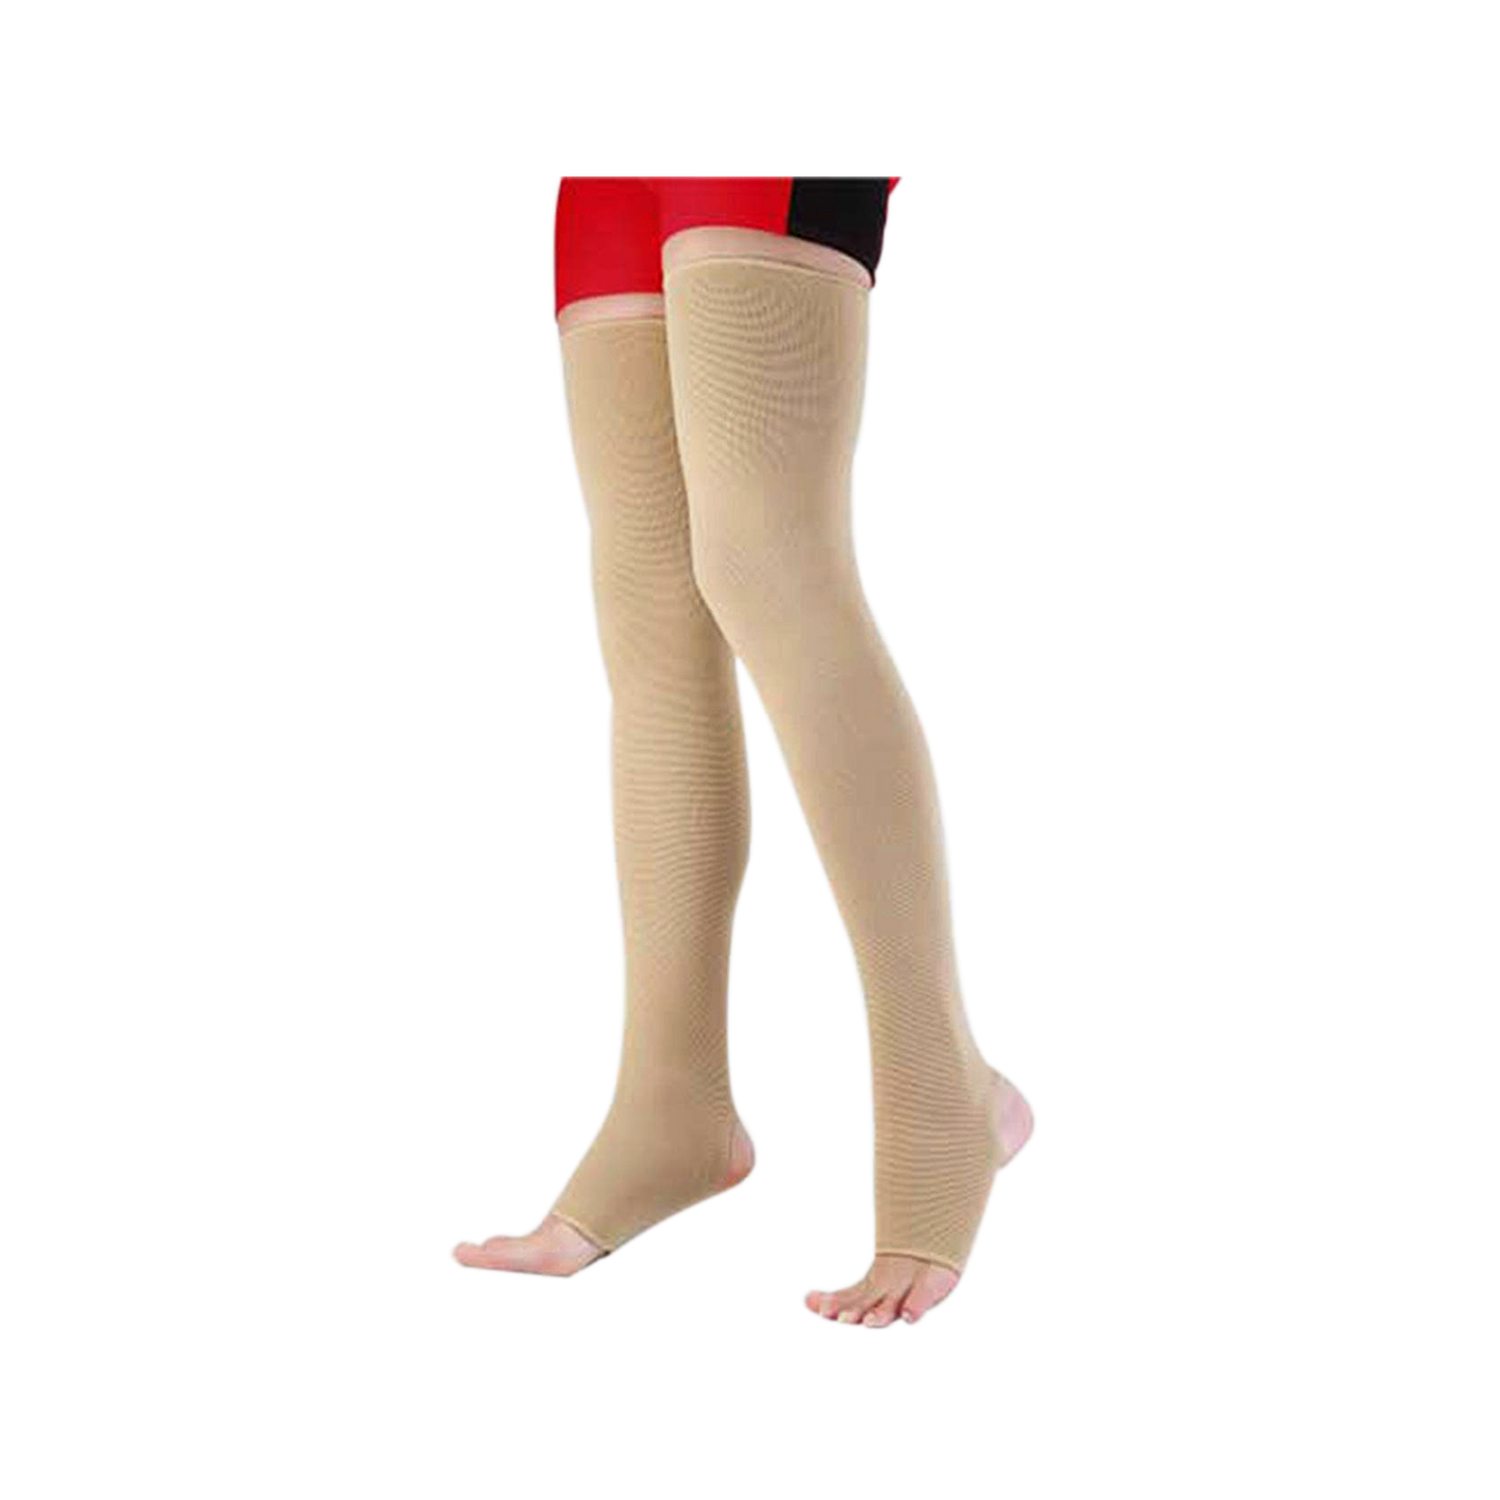 Burima Surgicals - Flamingo Varicose Vein Stockings are specially